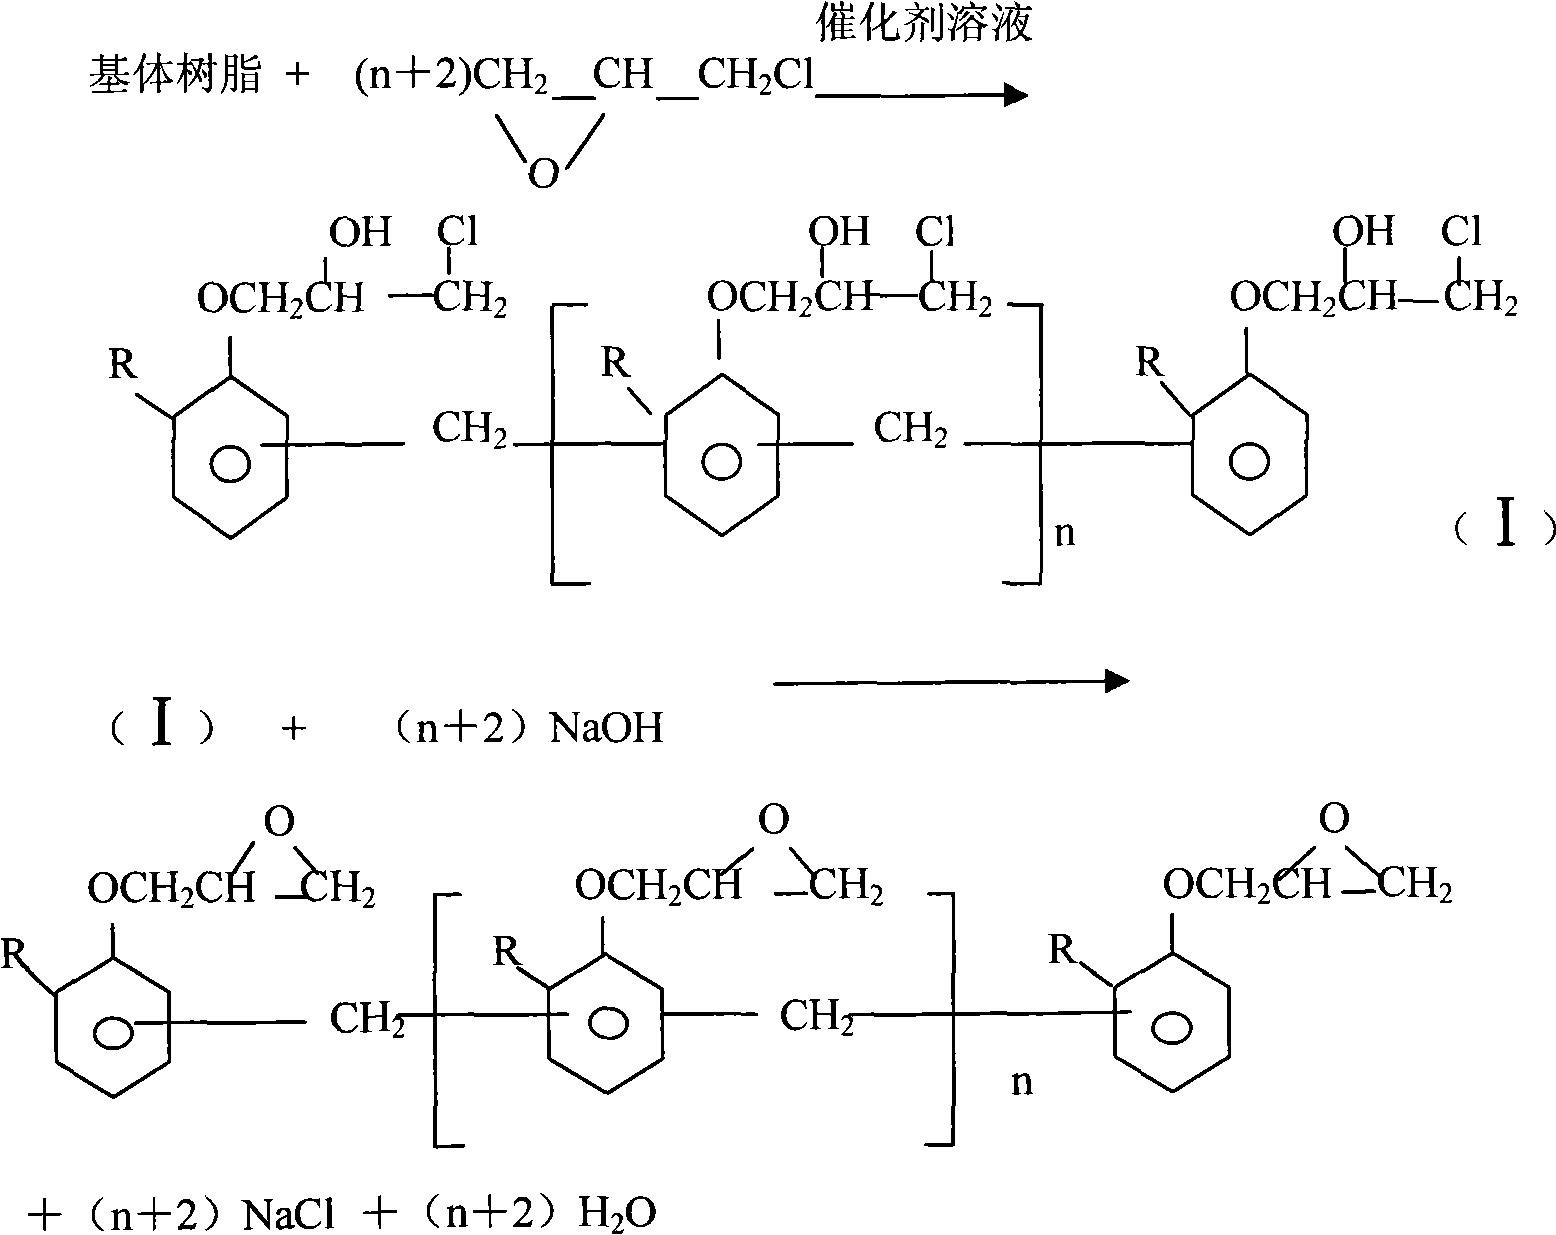 Method for preparing epoxy resins of phenol formaldehyde type